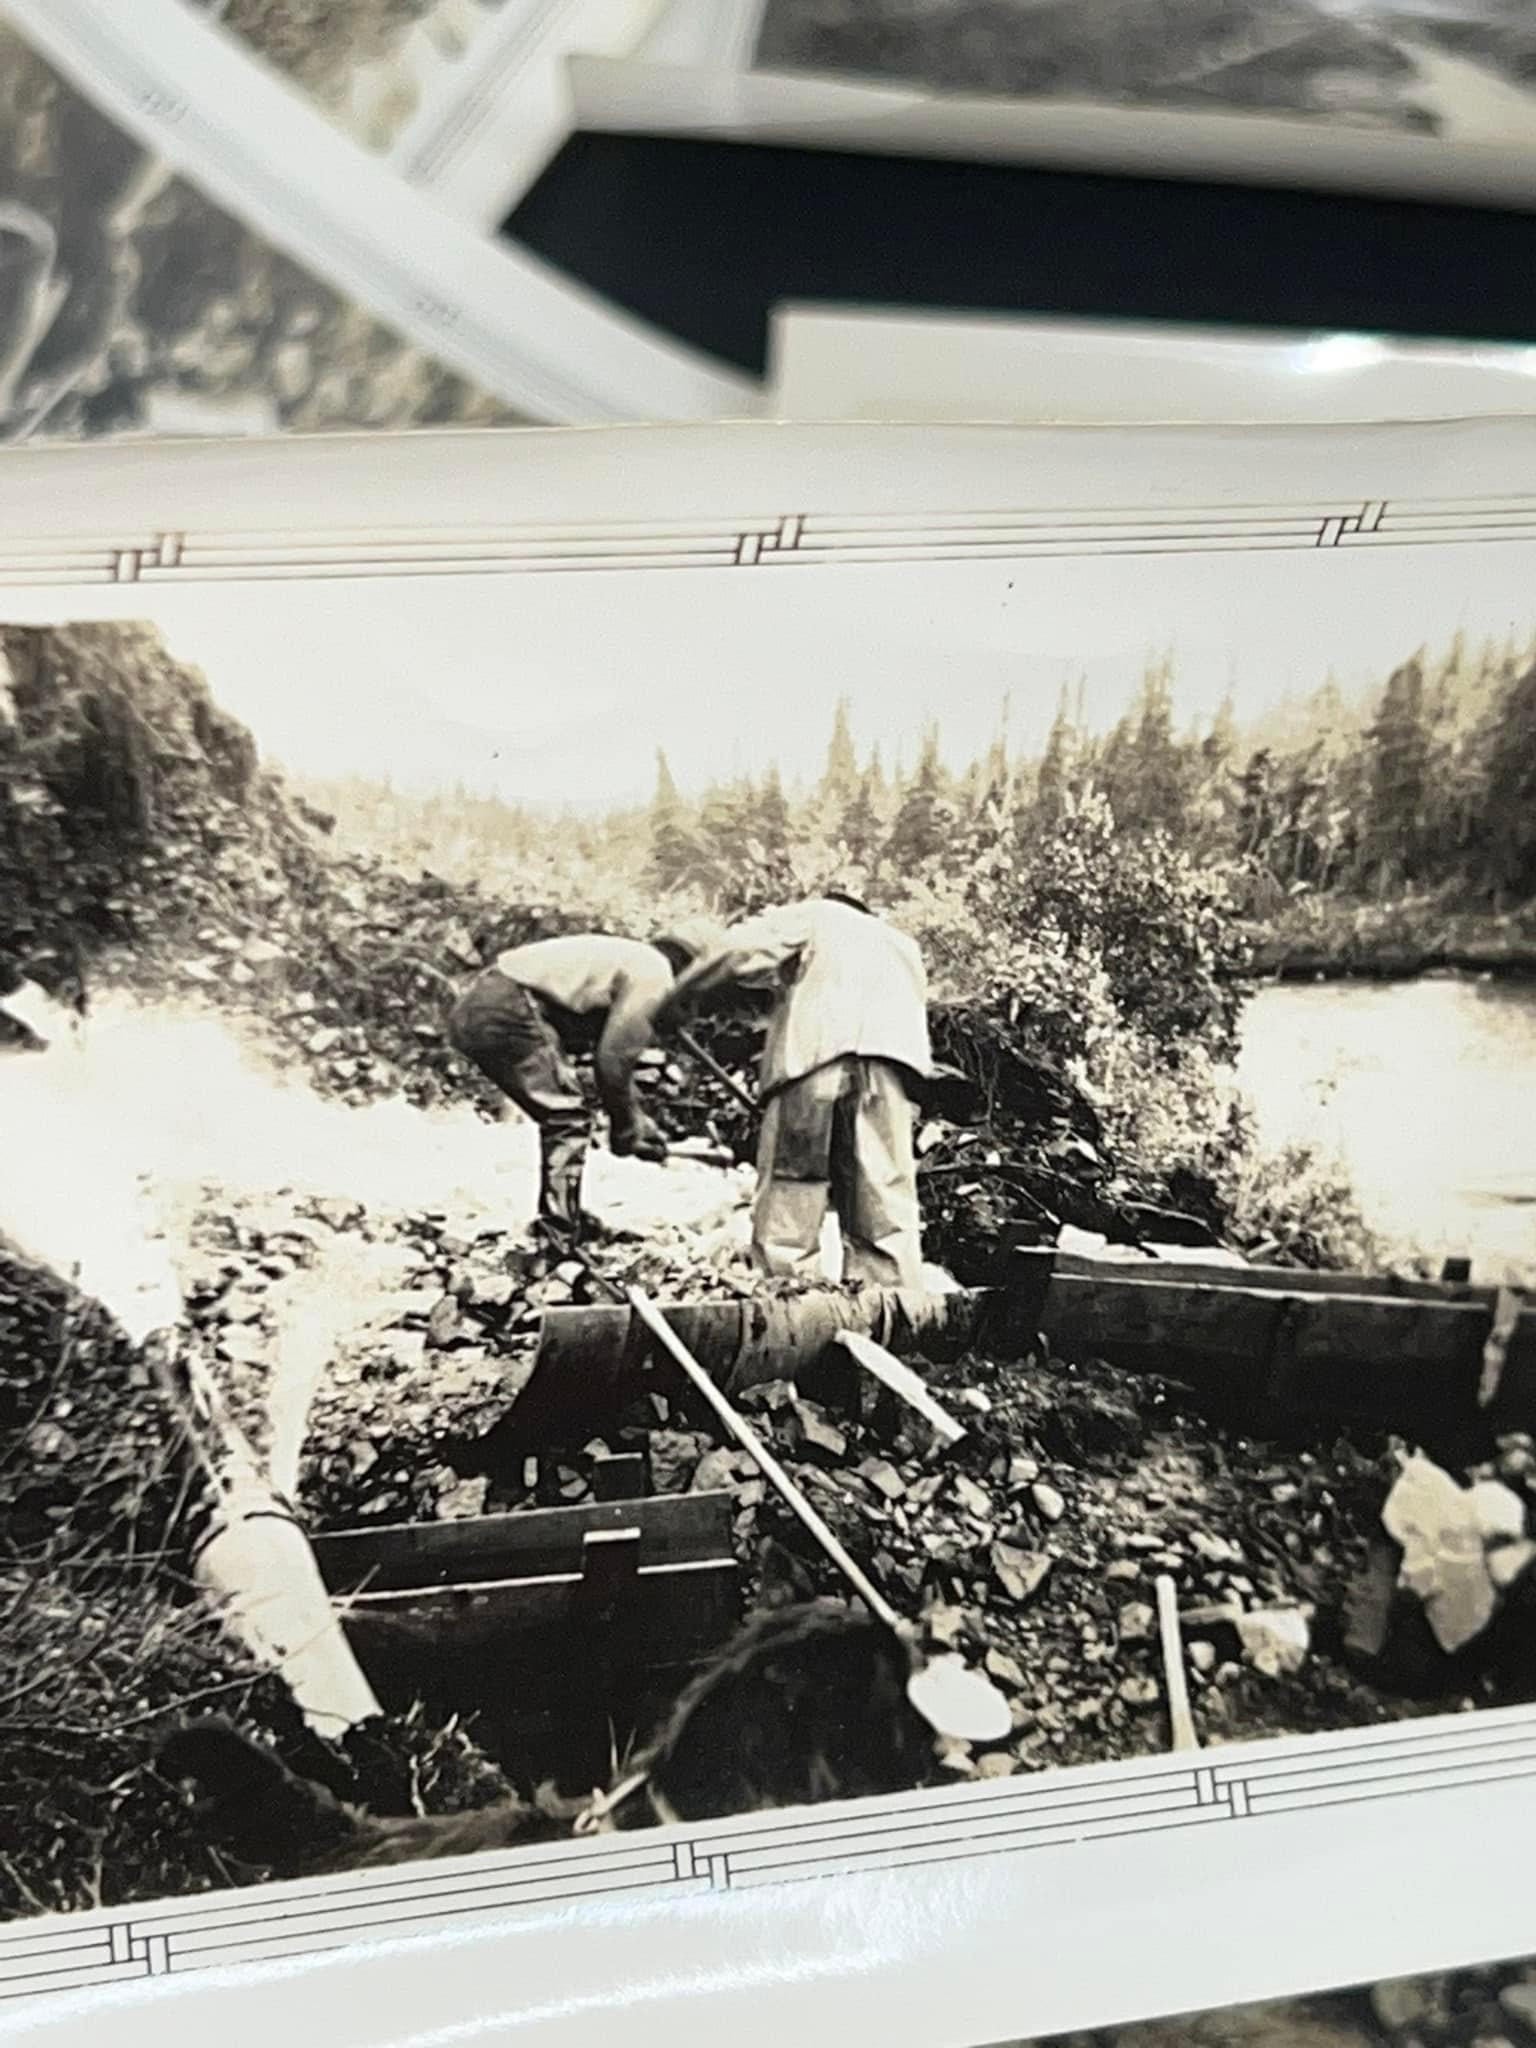 Vintage photos snapshots Early Alaska 1936-1937 mining idd occupational